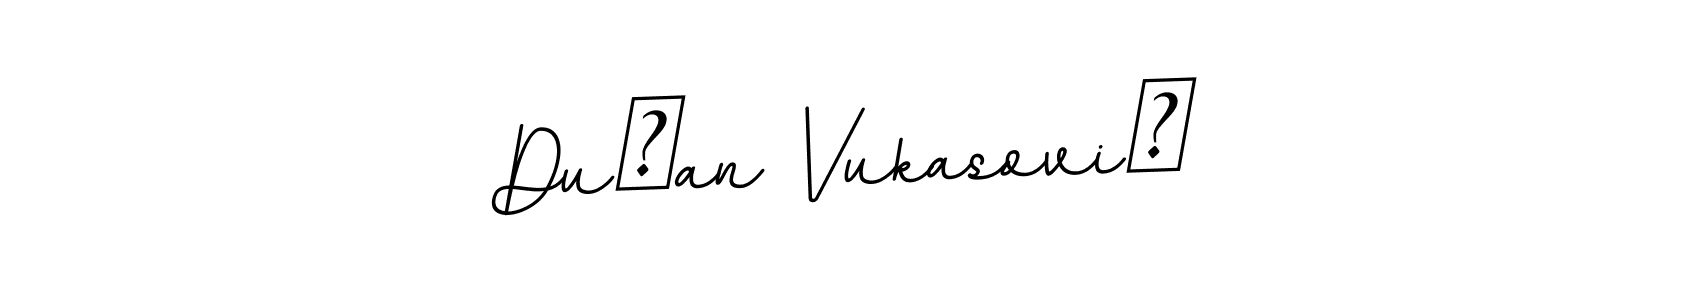 How to Draw Dušan Vukasović signature style? BallpointsItalic-DORy9 is a latest design signature styles for name Dušan Vukasović. Dušan Vukasović signature style 11 images and pictures png